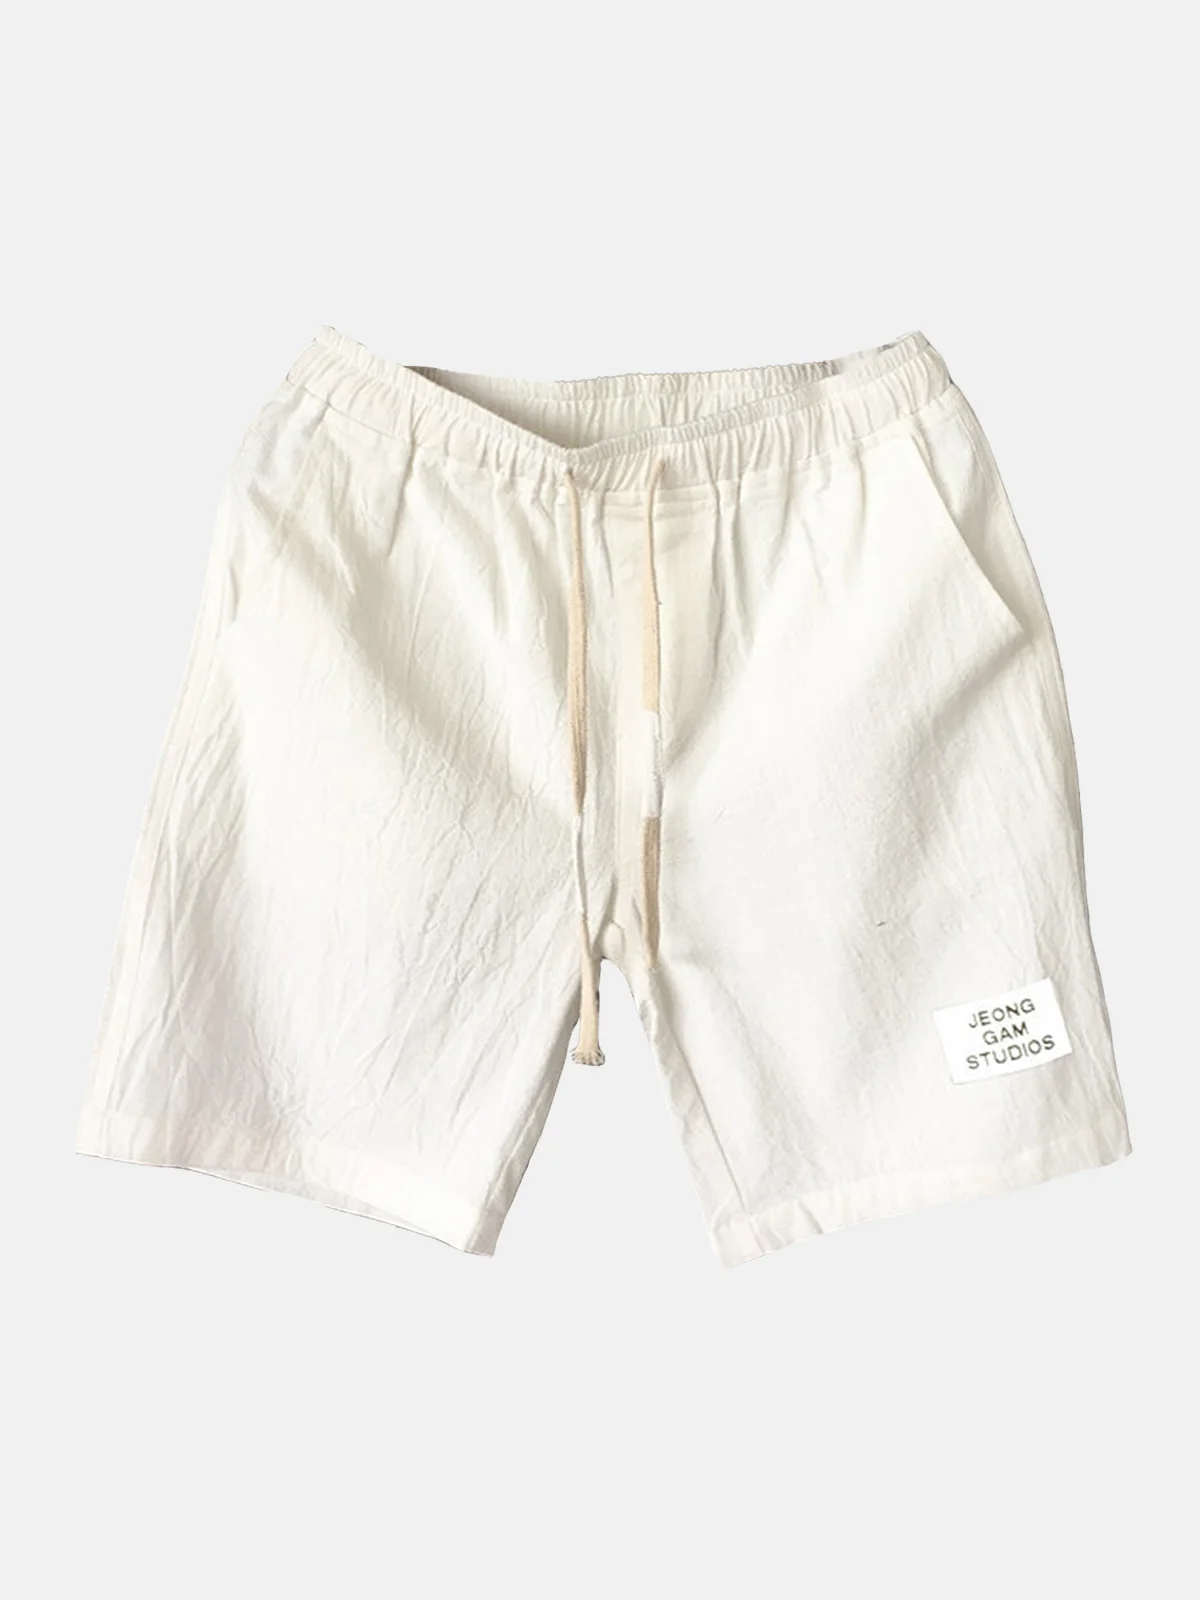 Royaura Beach Vacation Retro Casual Men's Natural Fiber Blend Shorts